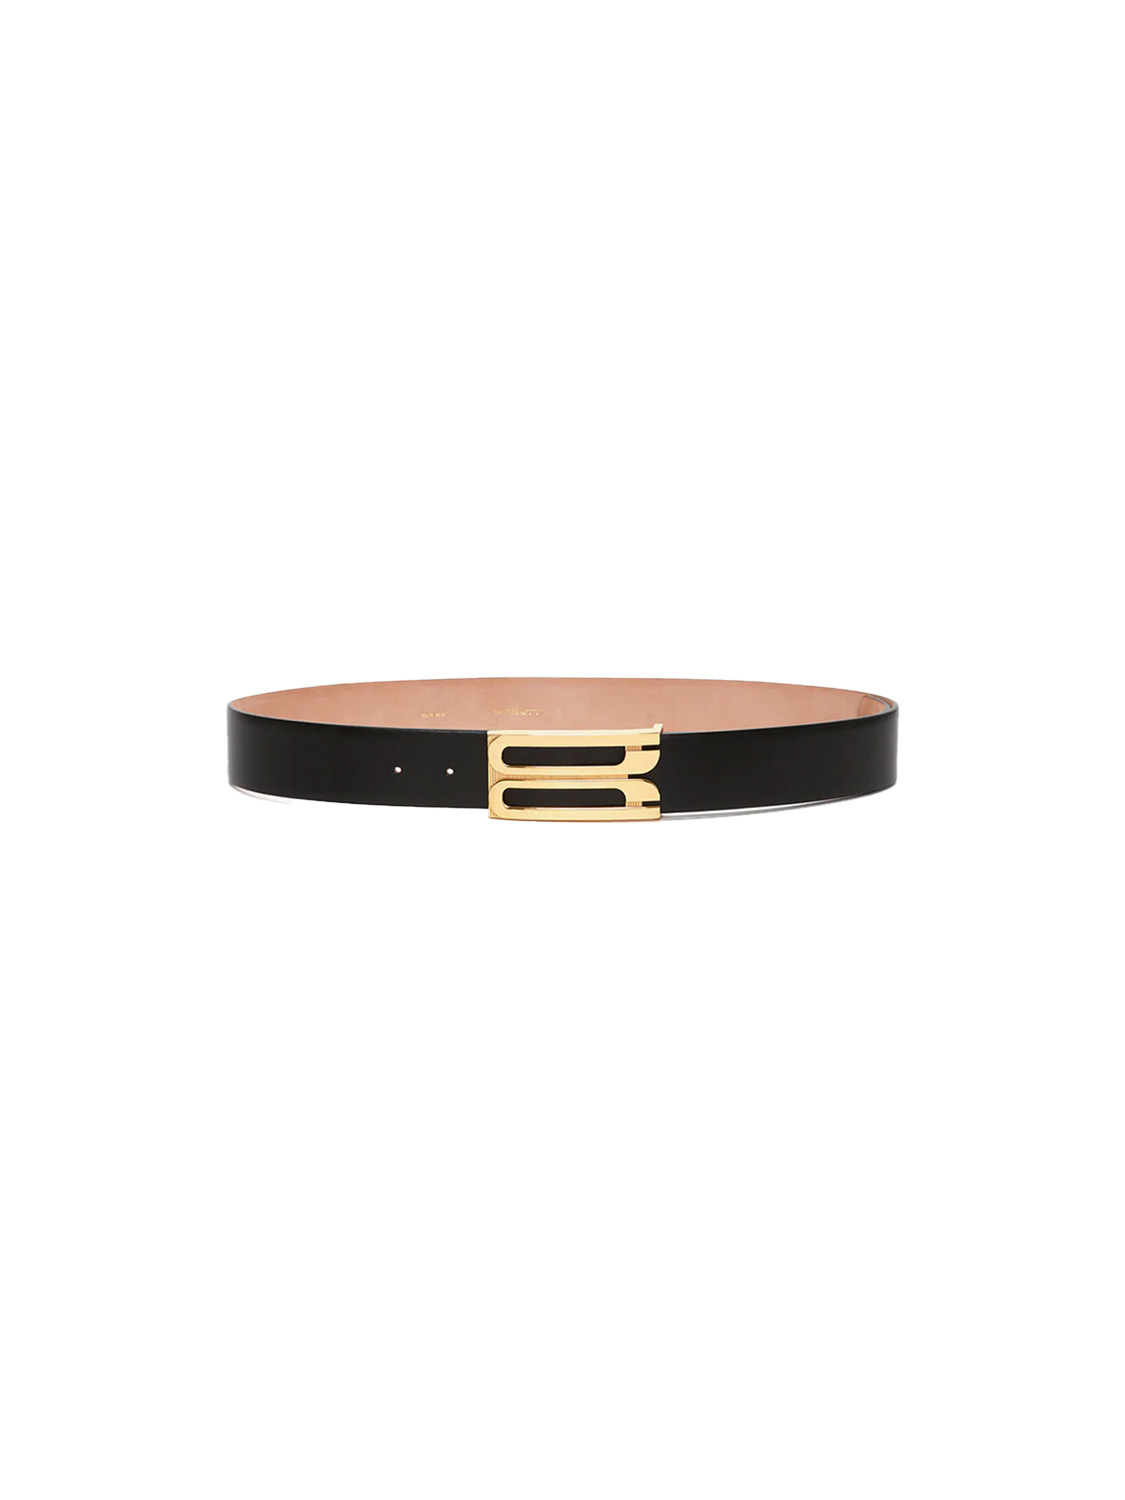 Victoria Beckham Jumbo Frame - Leather belt with gold-coloured buckle  black S